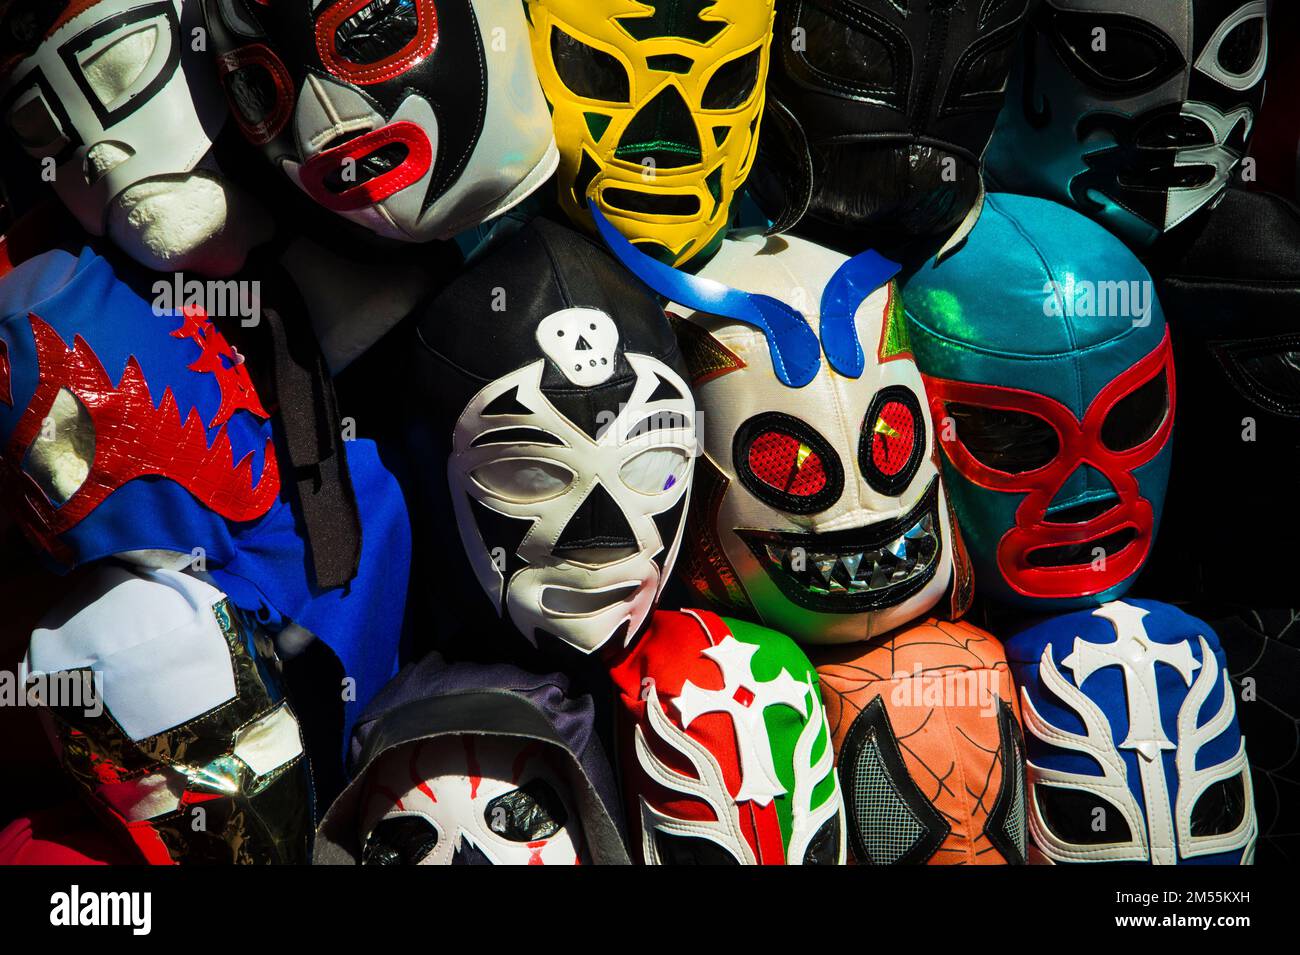 Maschere luchador wrestler messicane - mercato all'aperto, Los Angeles Foto Stock